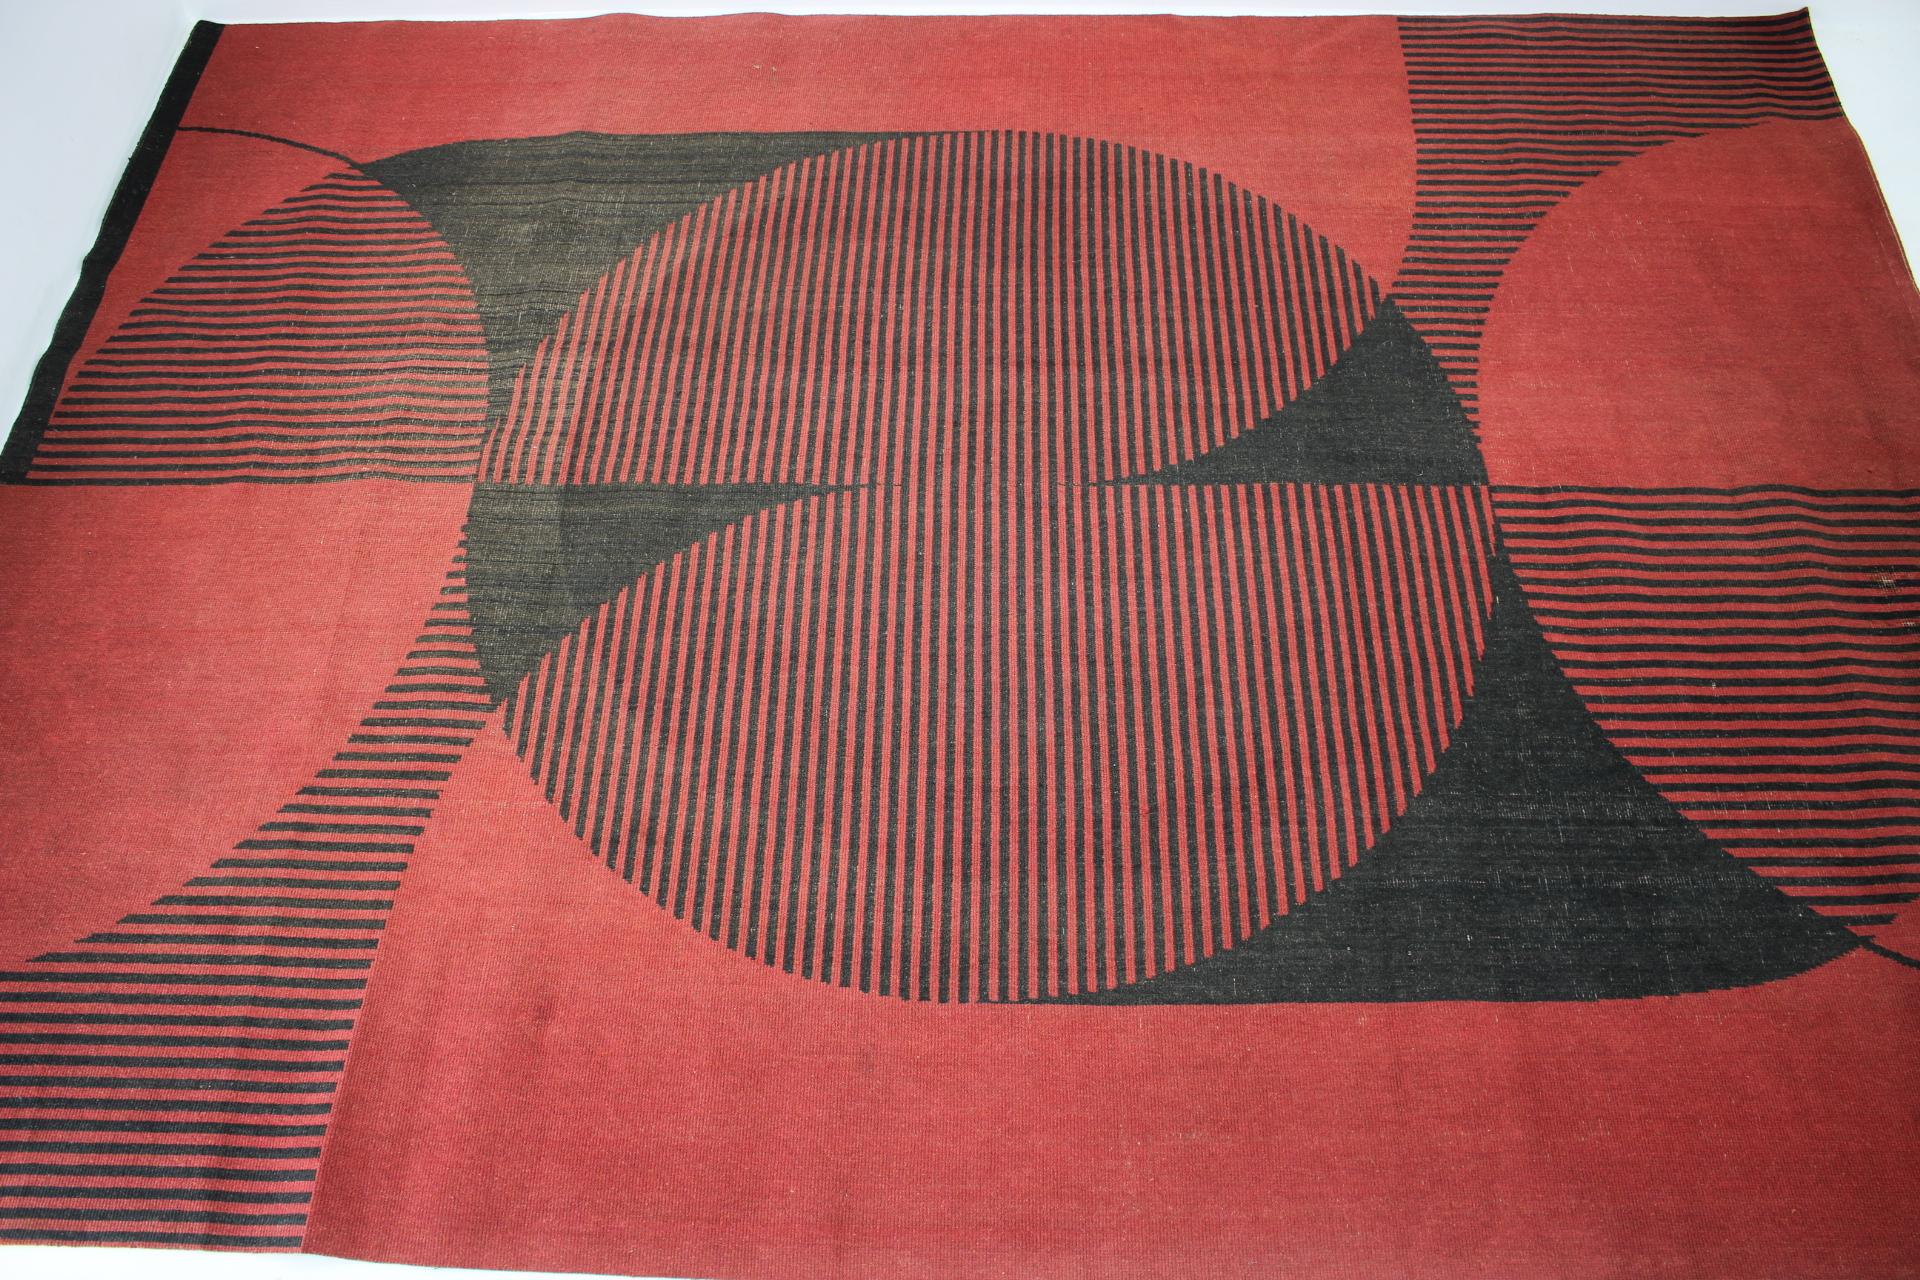 - Czechoslovakia, 1970s
- Good original condition
- Very interesting pattern.
 